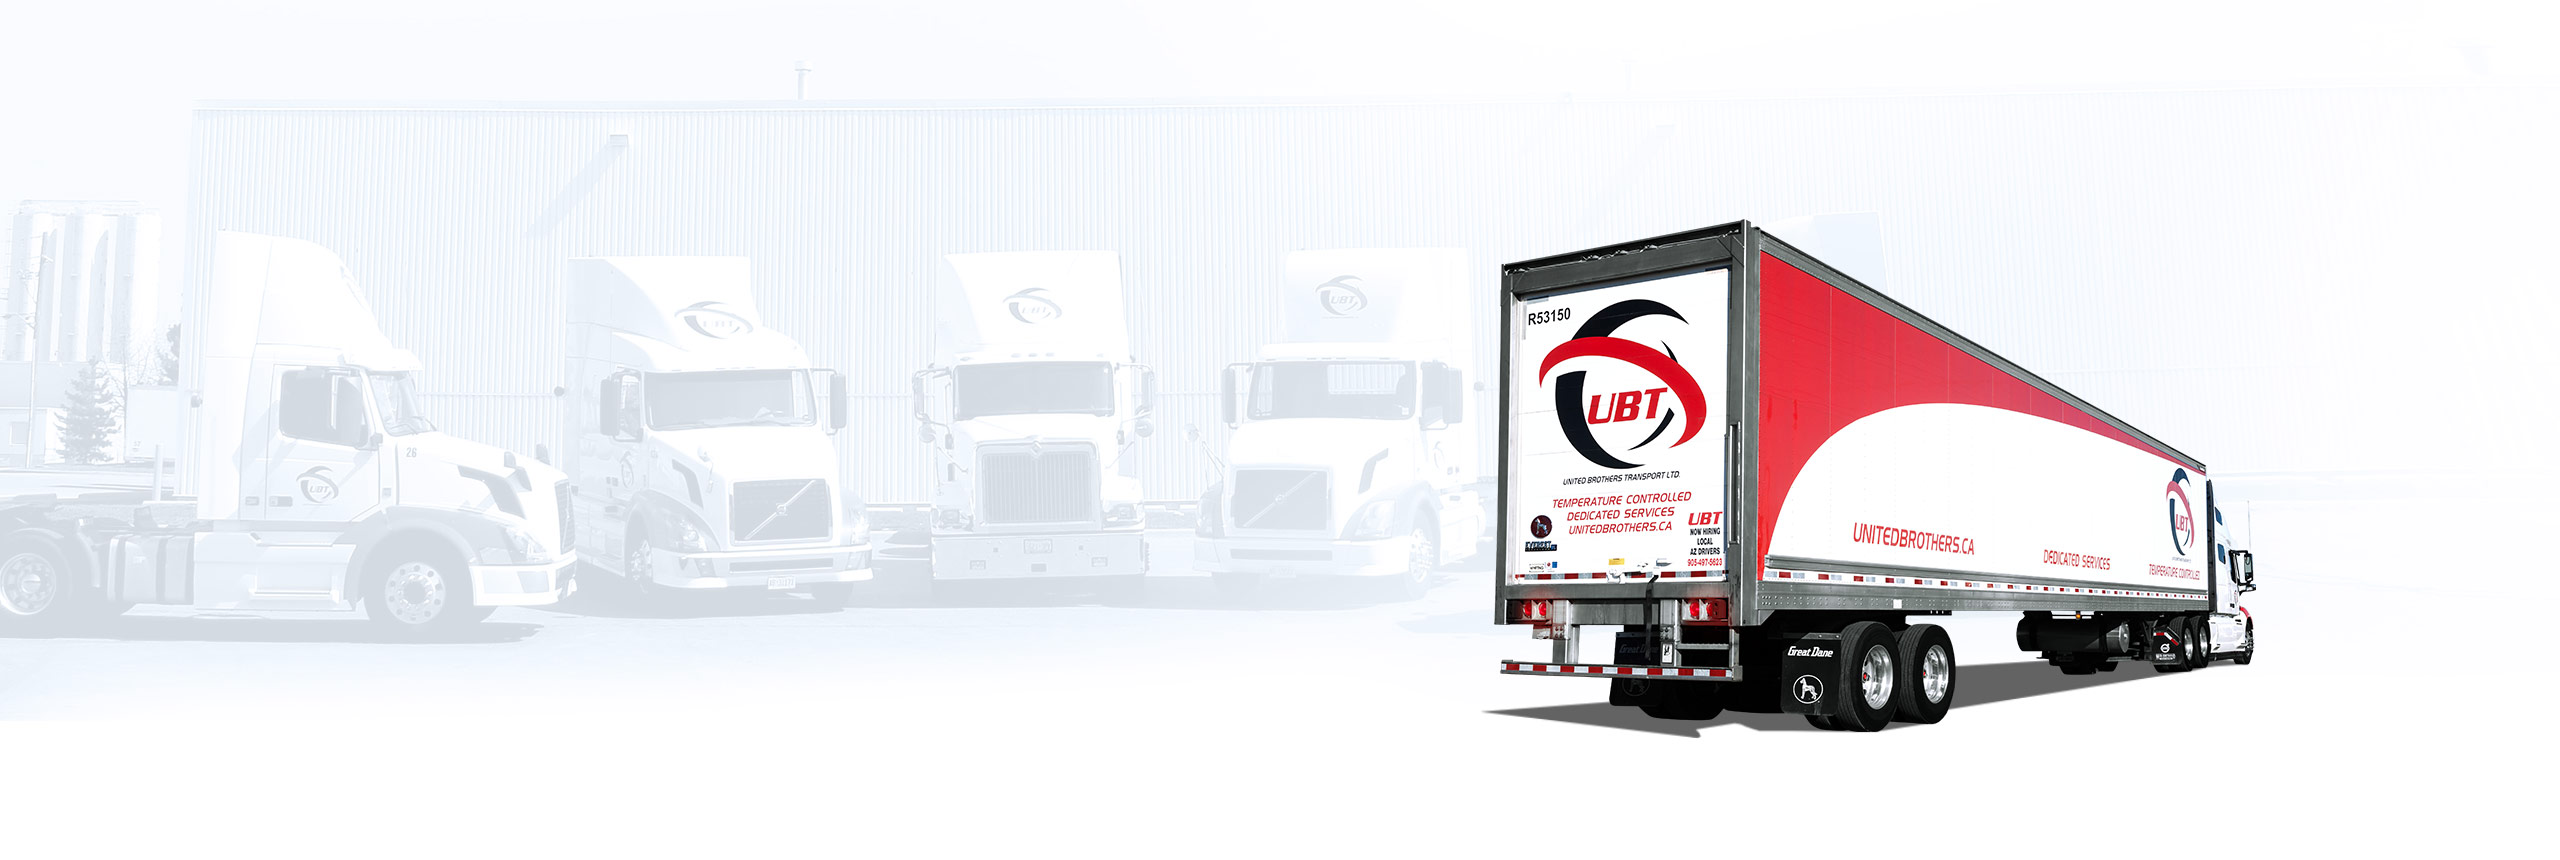 United Brothers Transport truck fleet